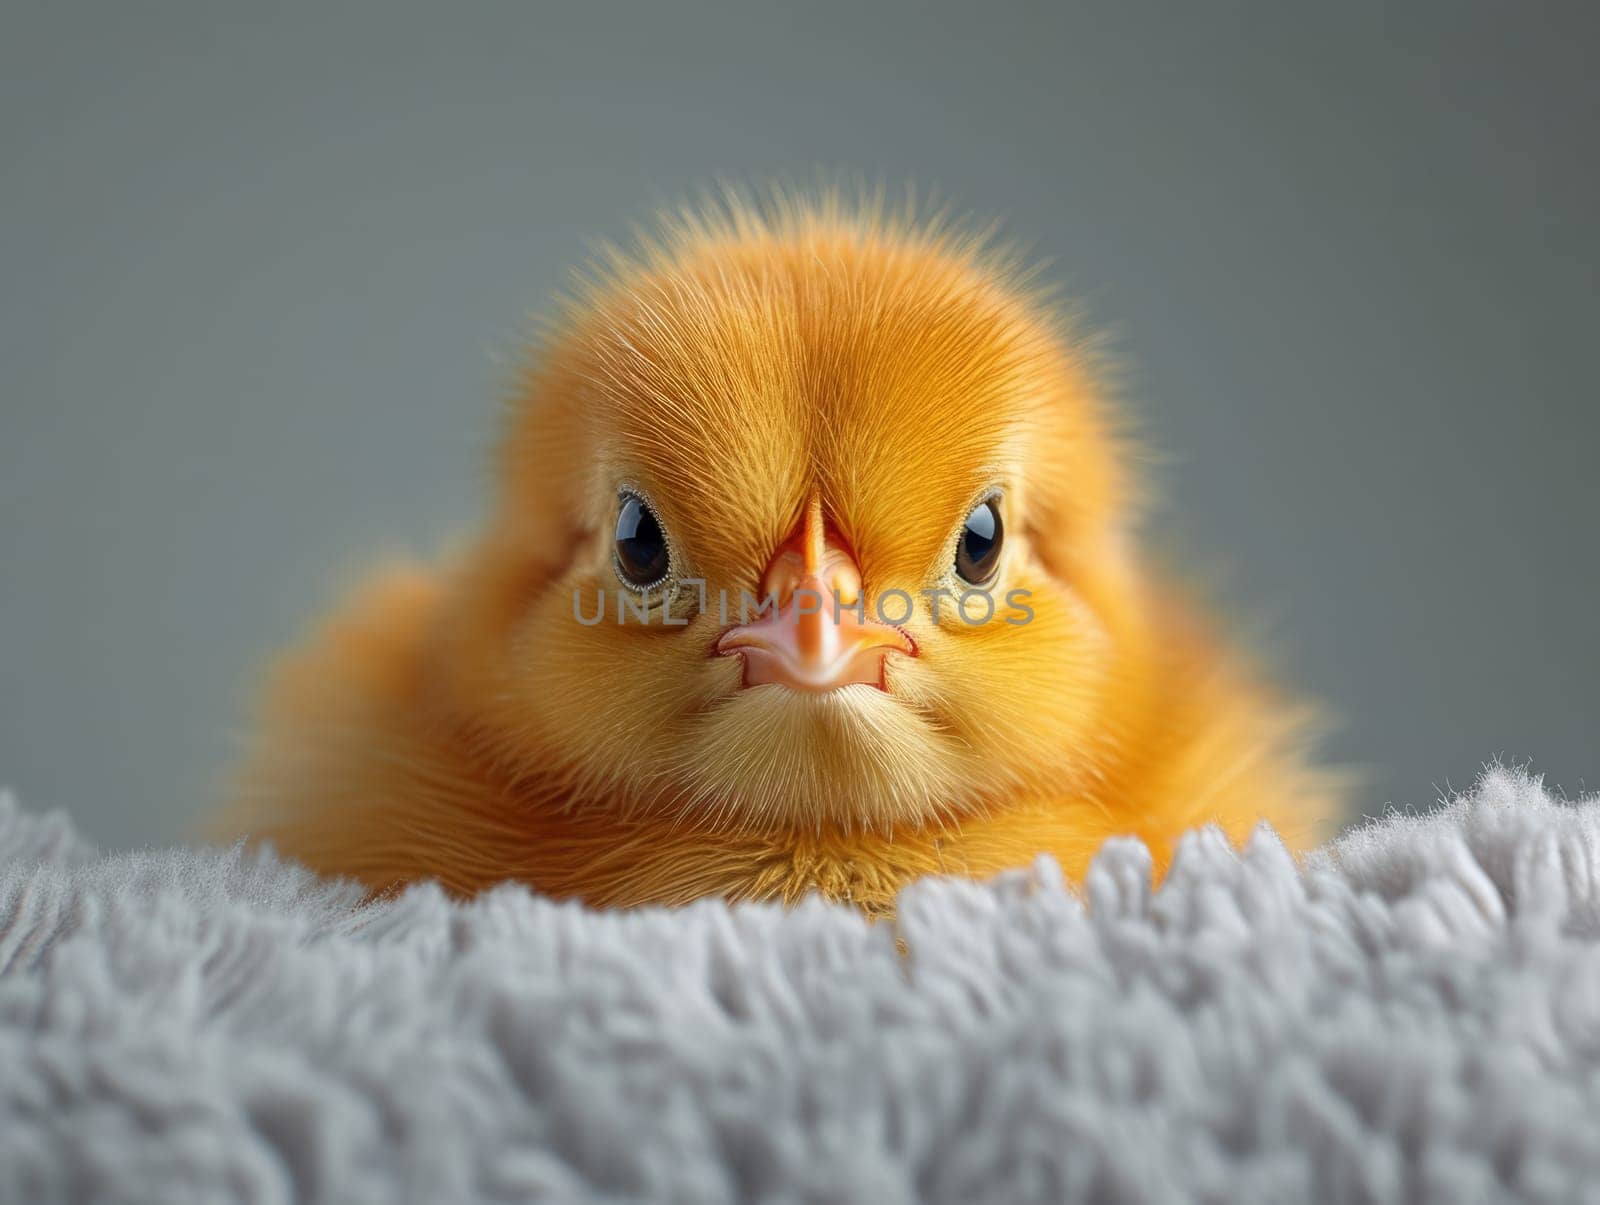 Cute Little Yellow Chick in Cosy Blanket. Fluffy Little Bird .